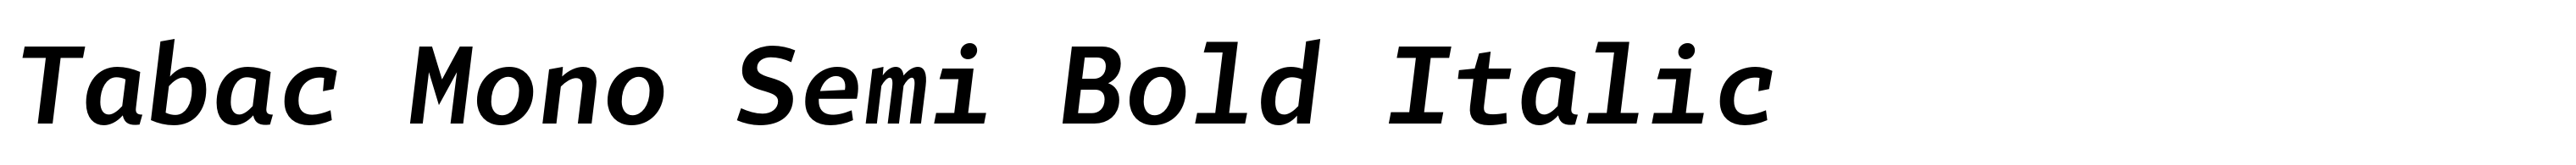 Tabac Mono Semi Bold Italic